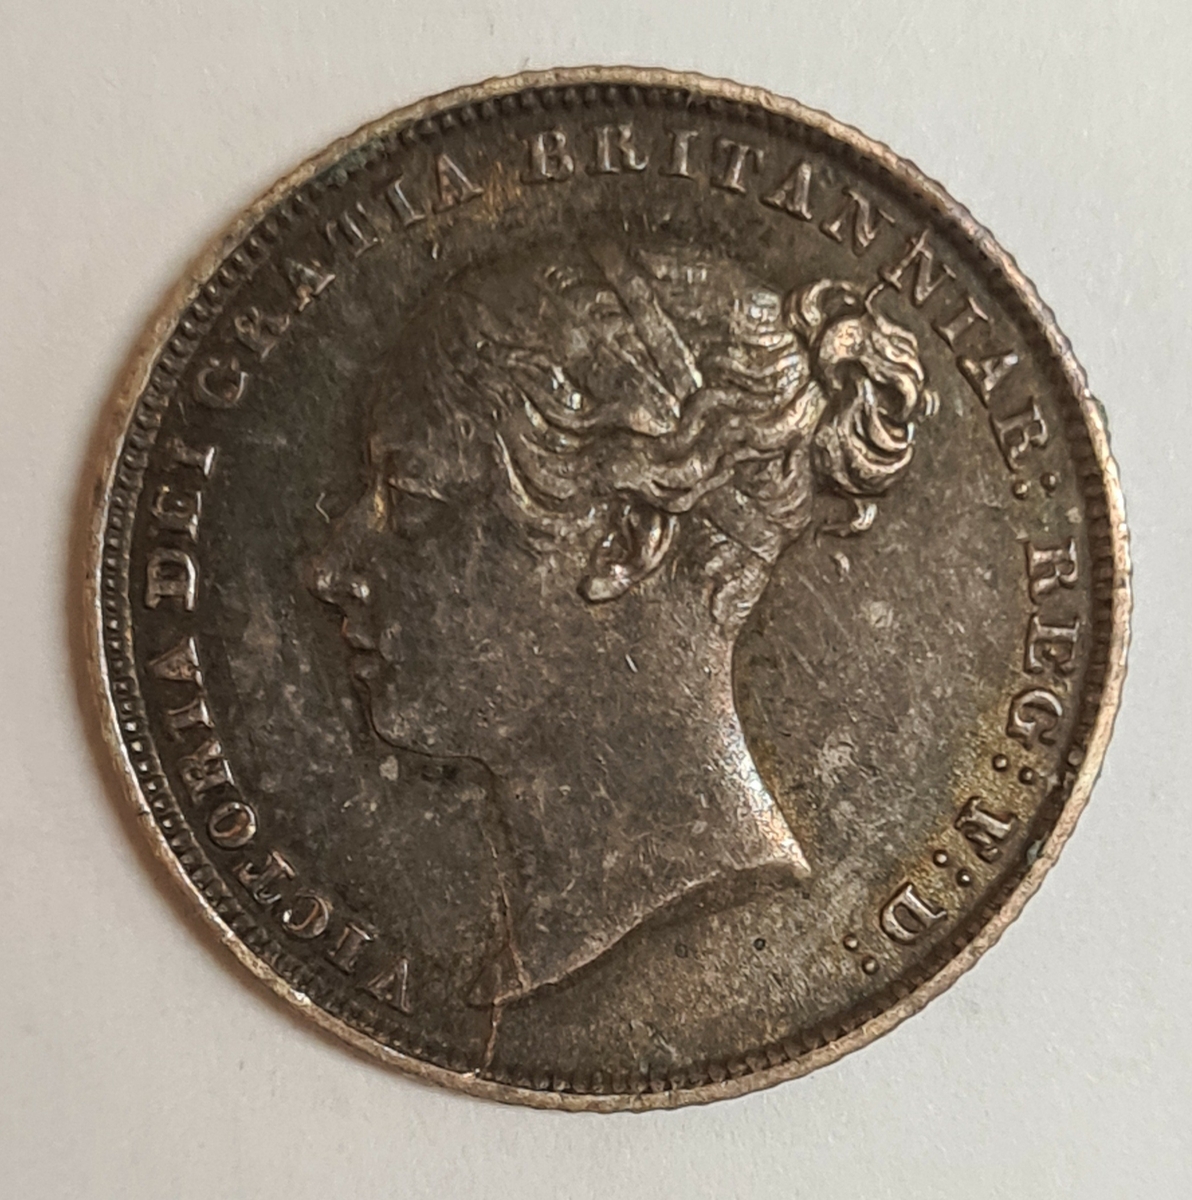 3 mynt från Storbritanien.
6 Pence, 1866
6 Pence, 1853
6 Pence, 1872